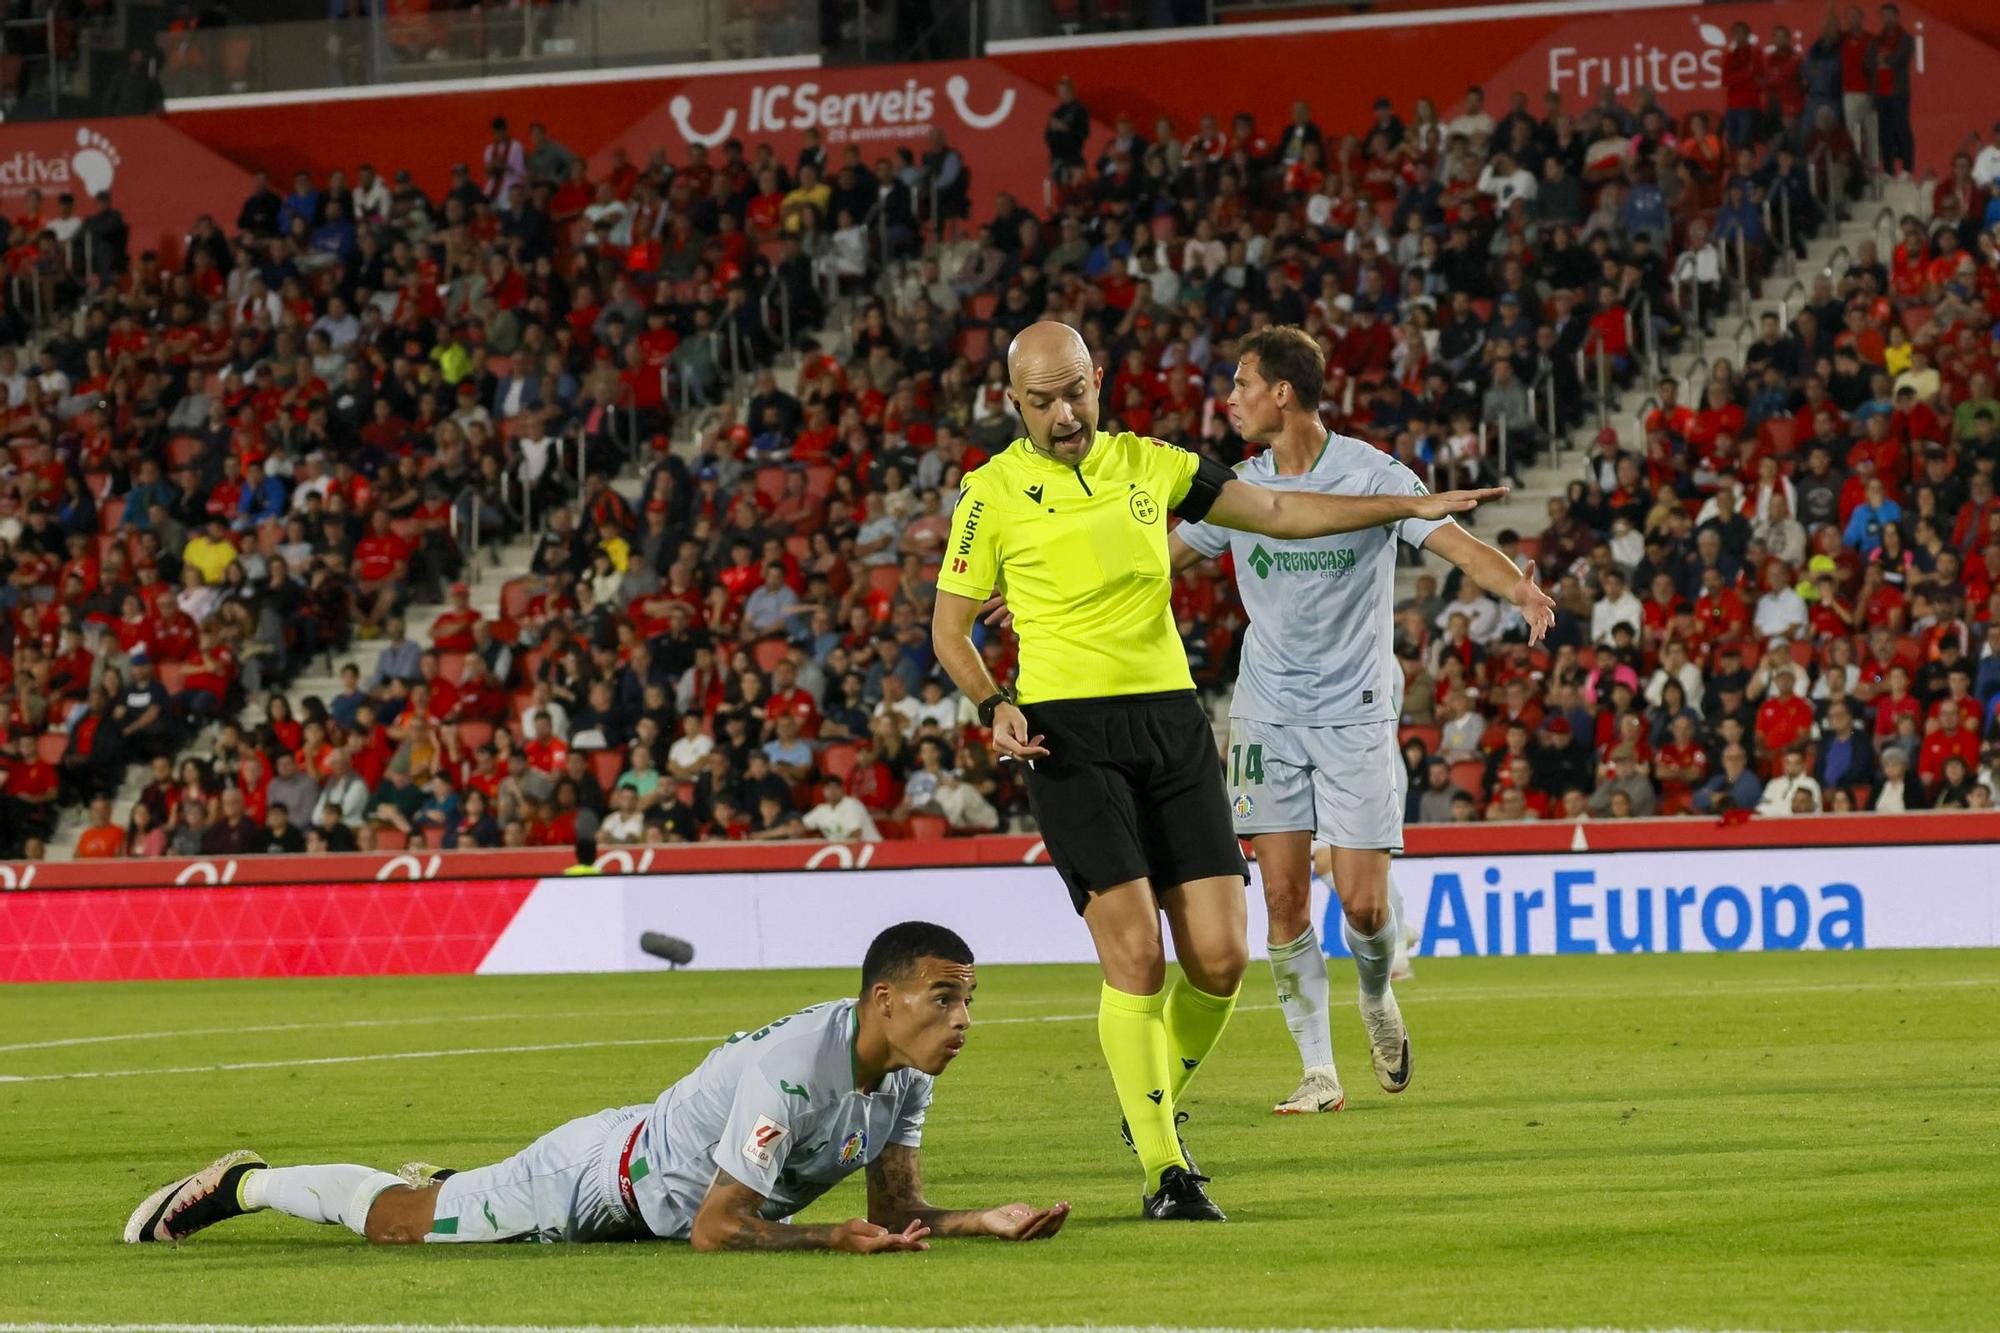 Las imágenes del RCD Mallorca-Getafe disputado en Son Moix (0-0)